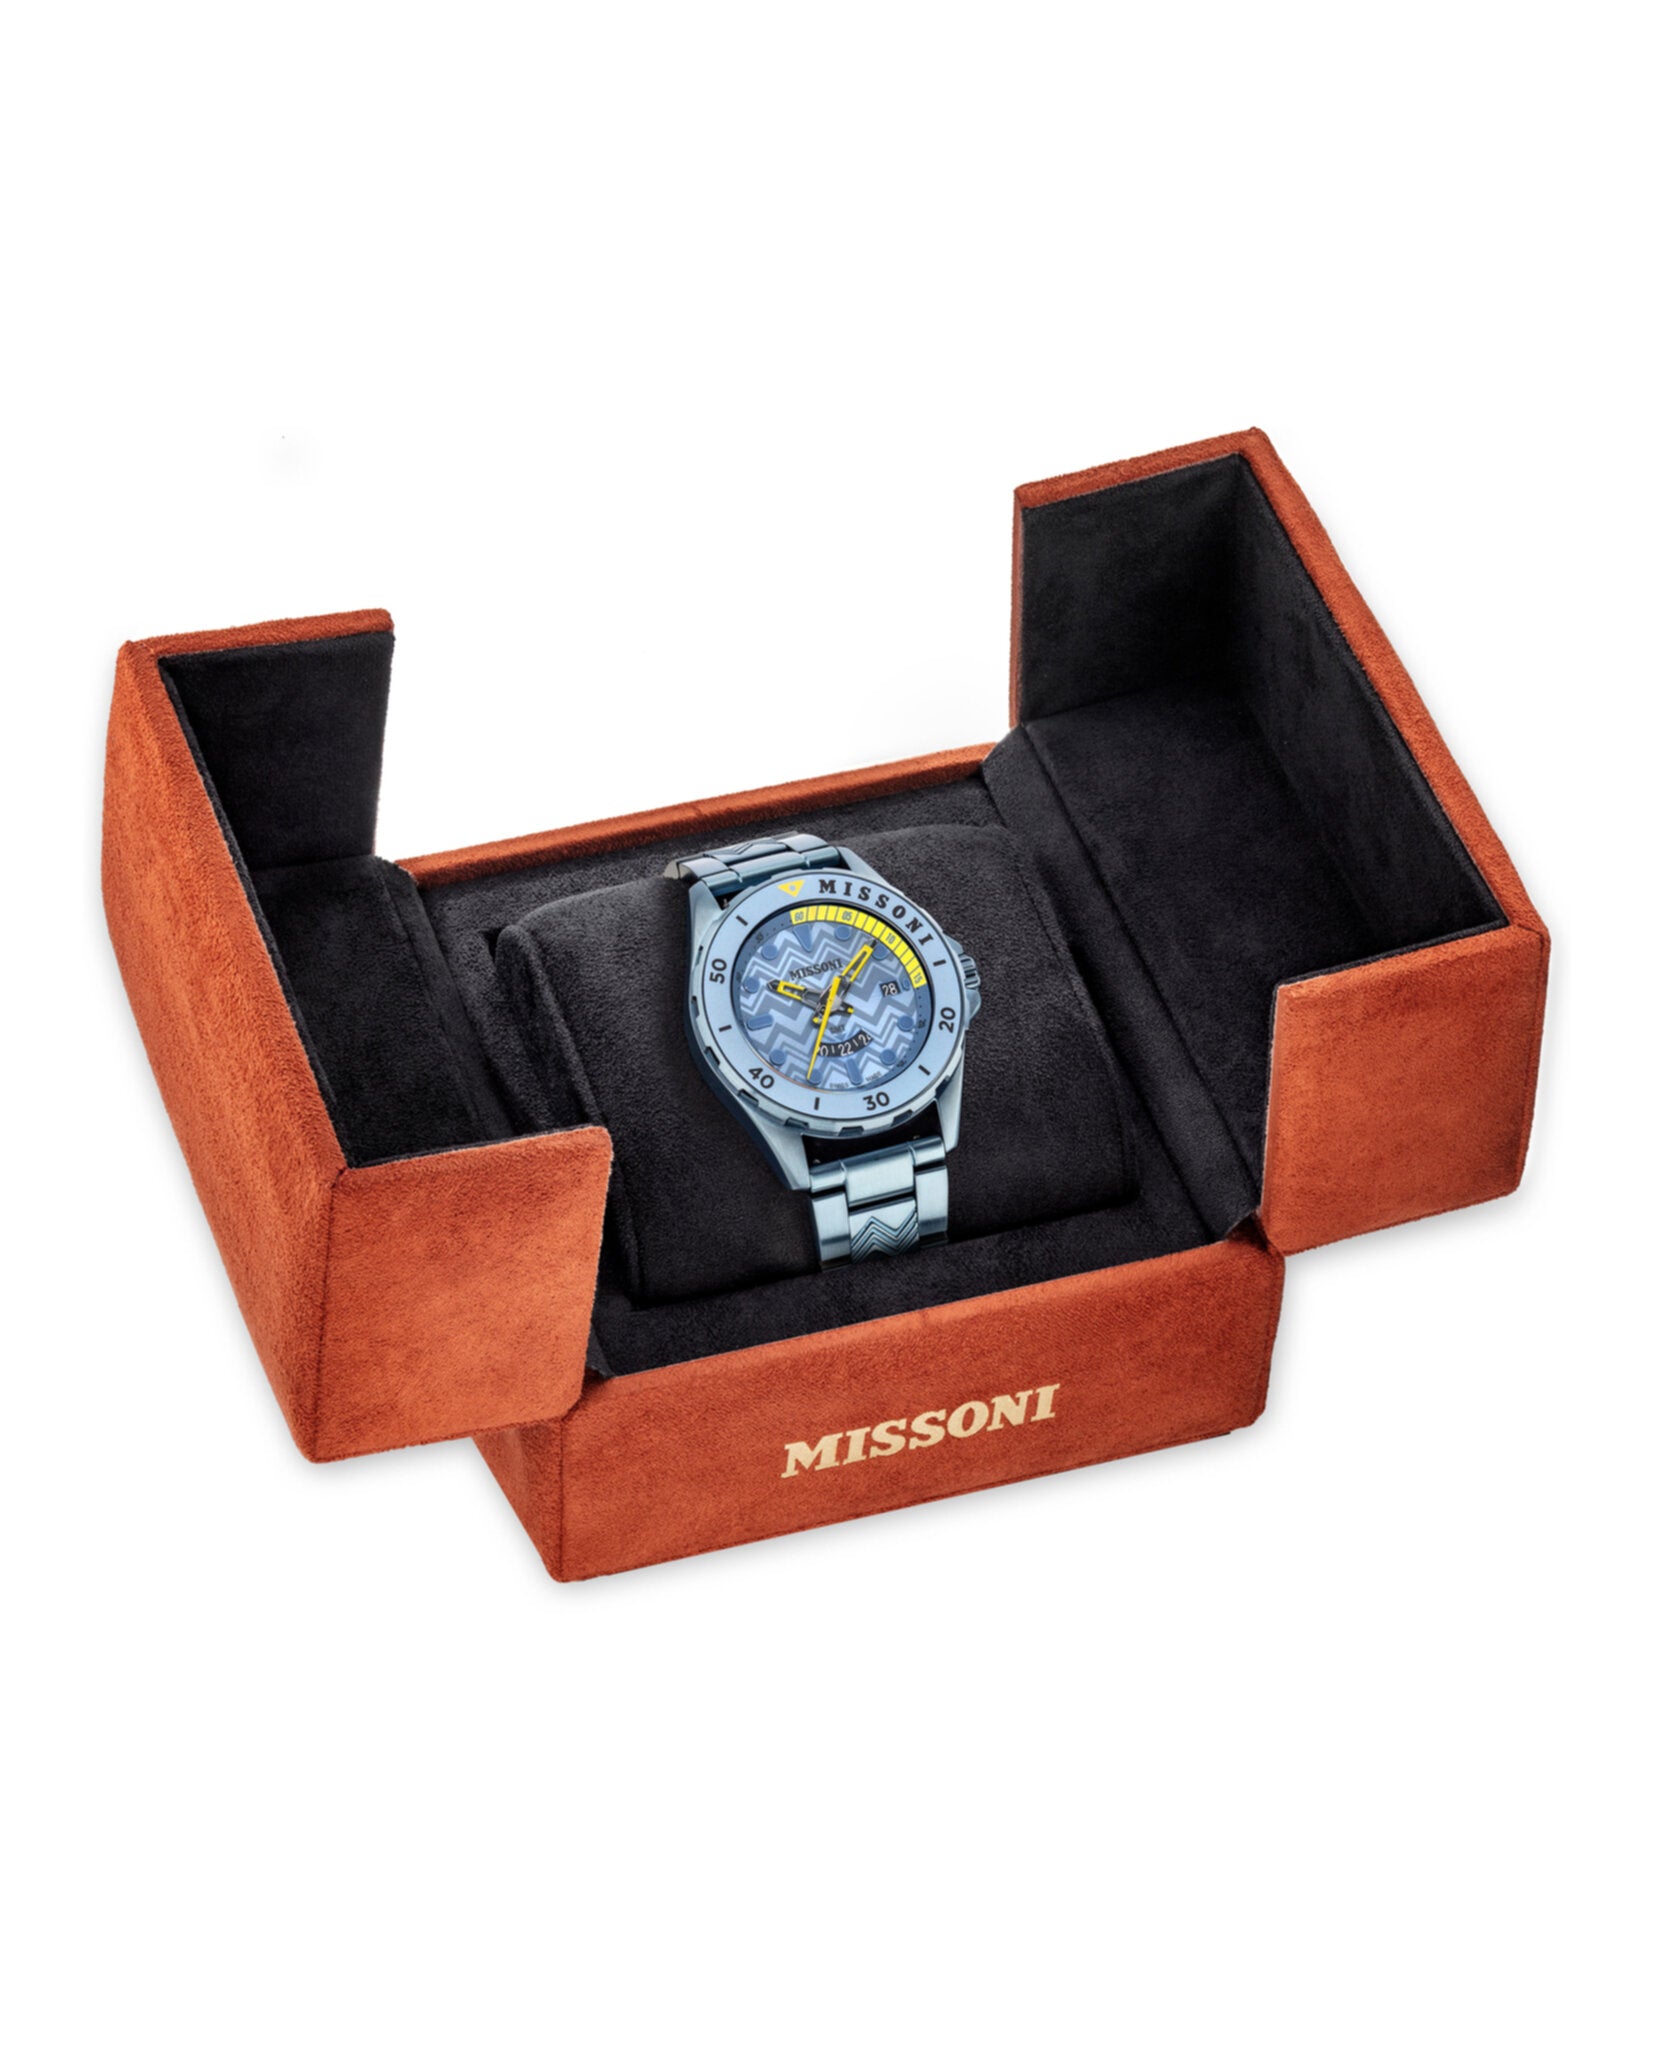 Missoni GMT Bracelet Watch